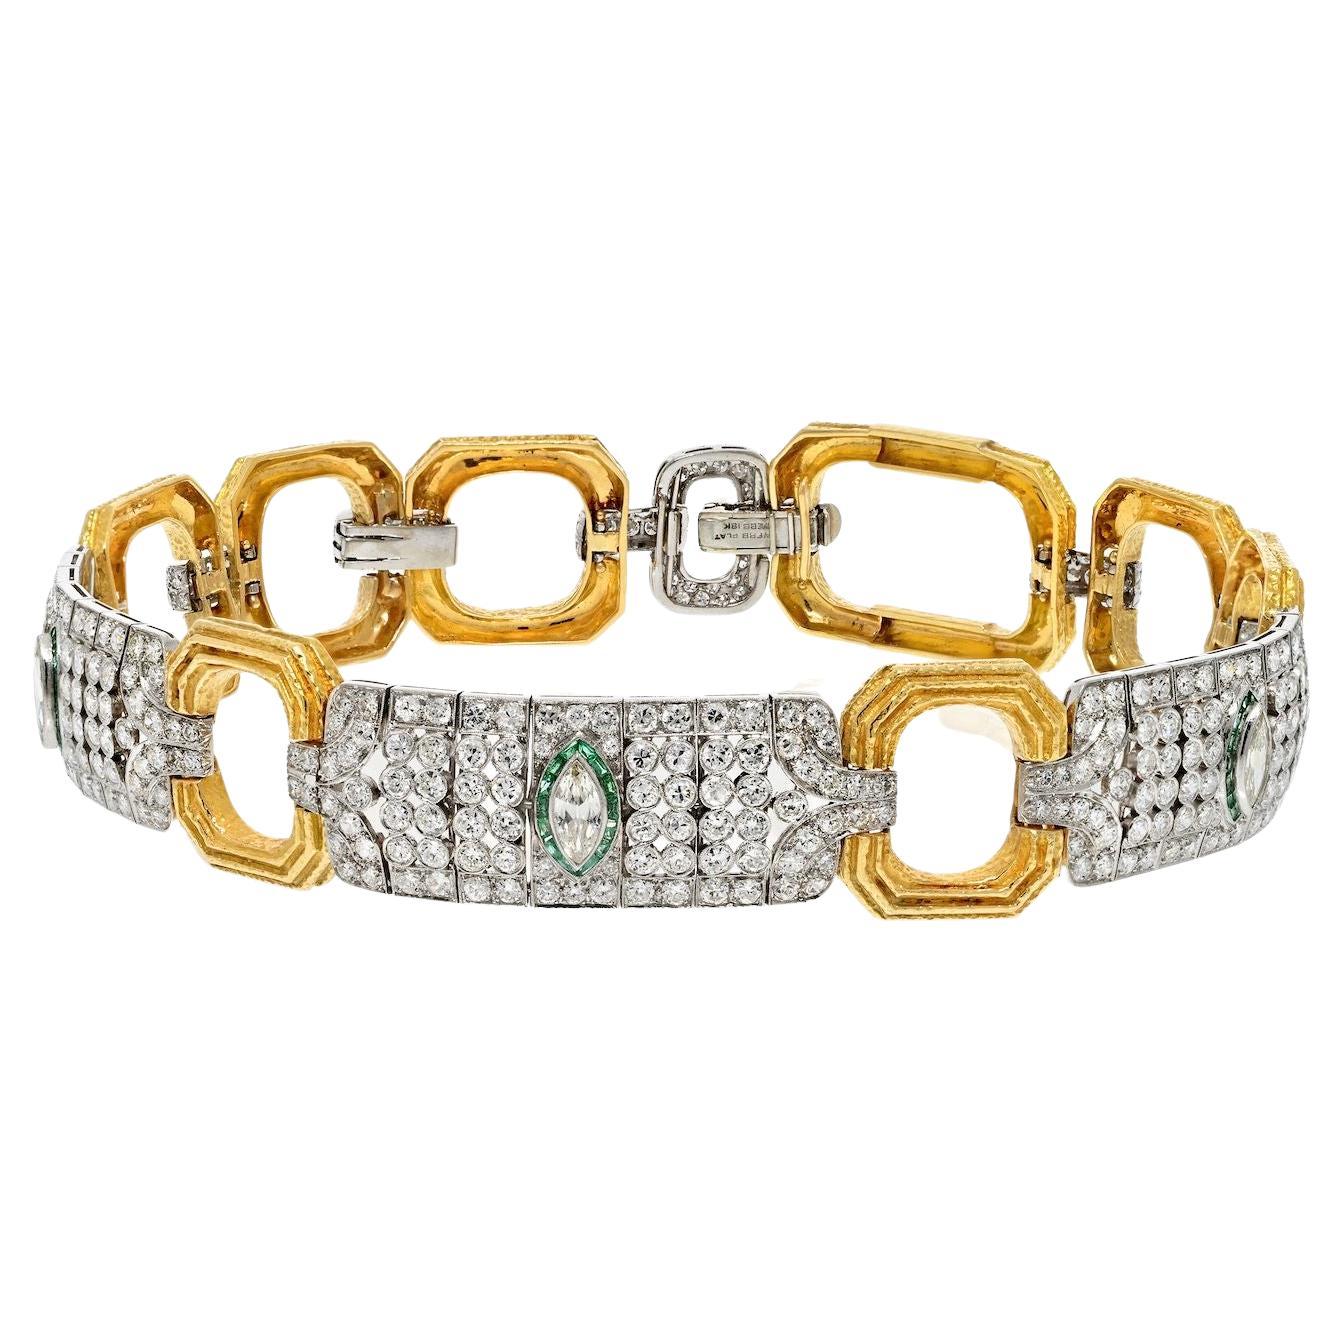 David Webb Platinum & 18K Yellow Gold 25 carat Diamond Collar Necklace